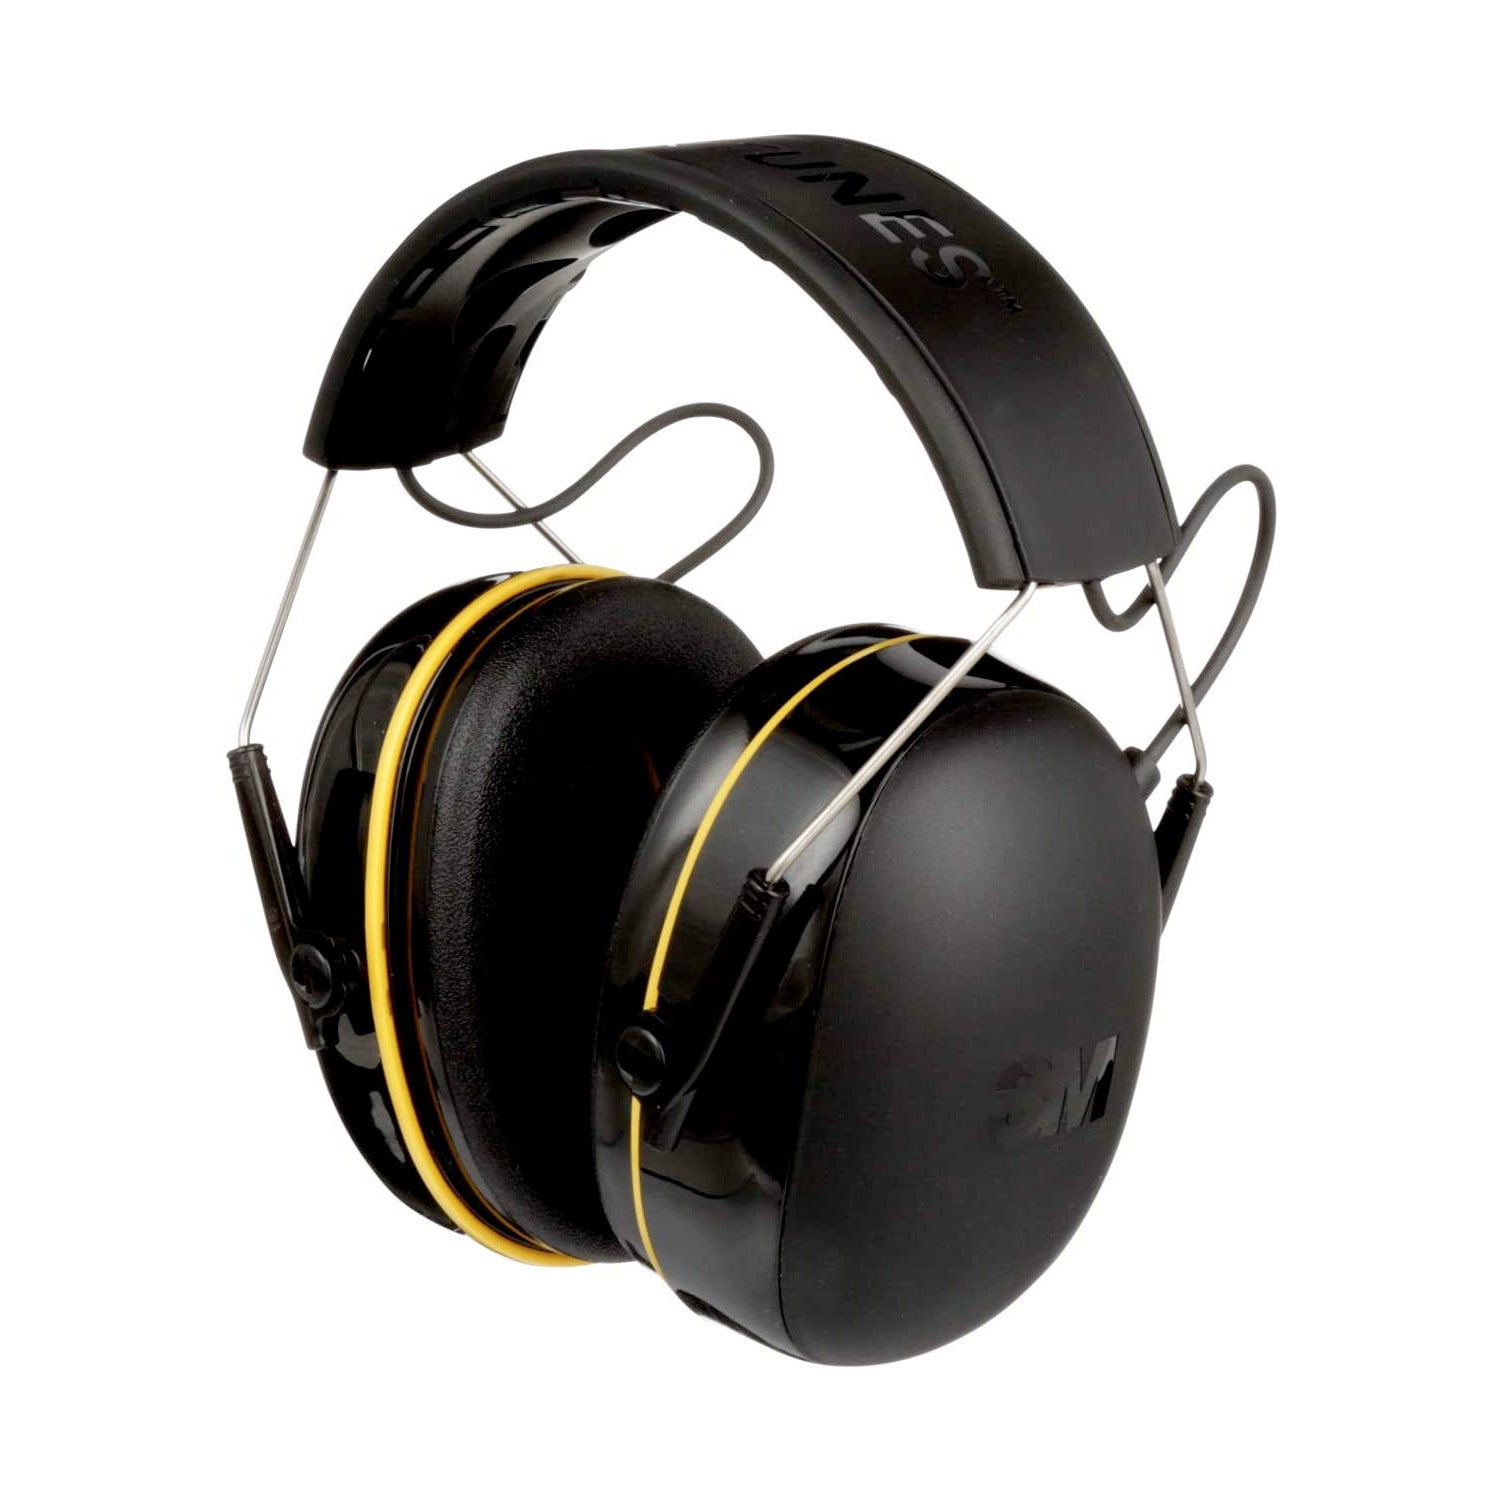 Black over-ear headphones